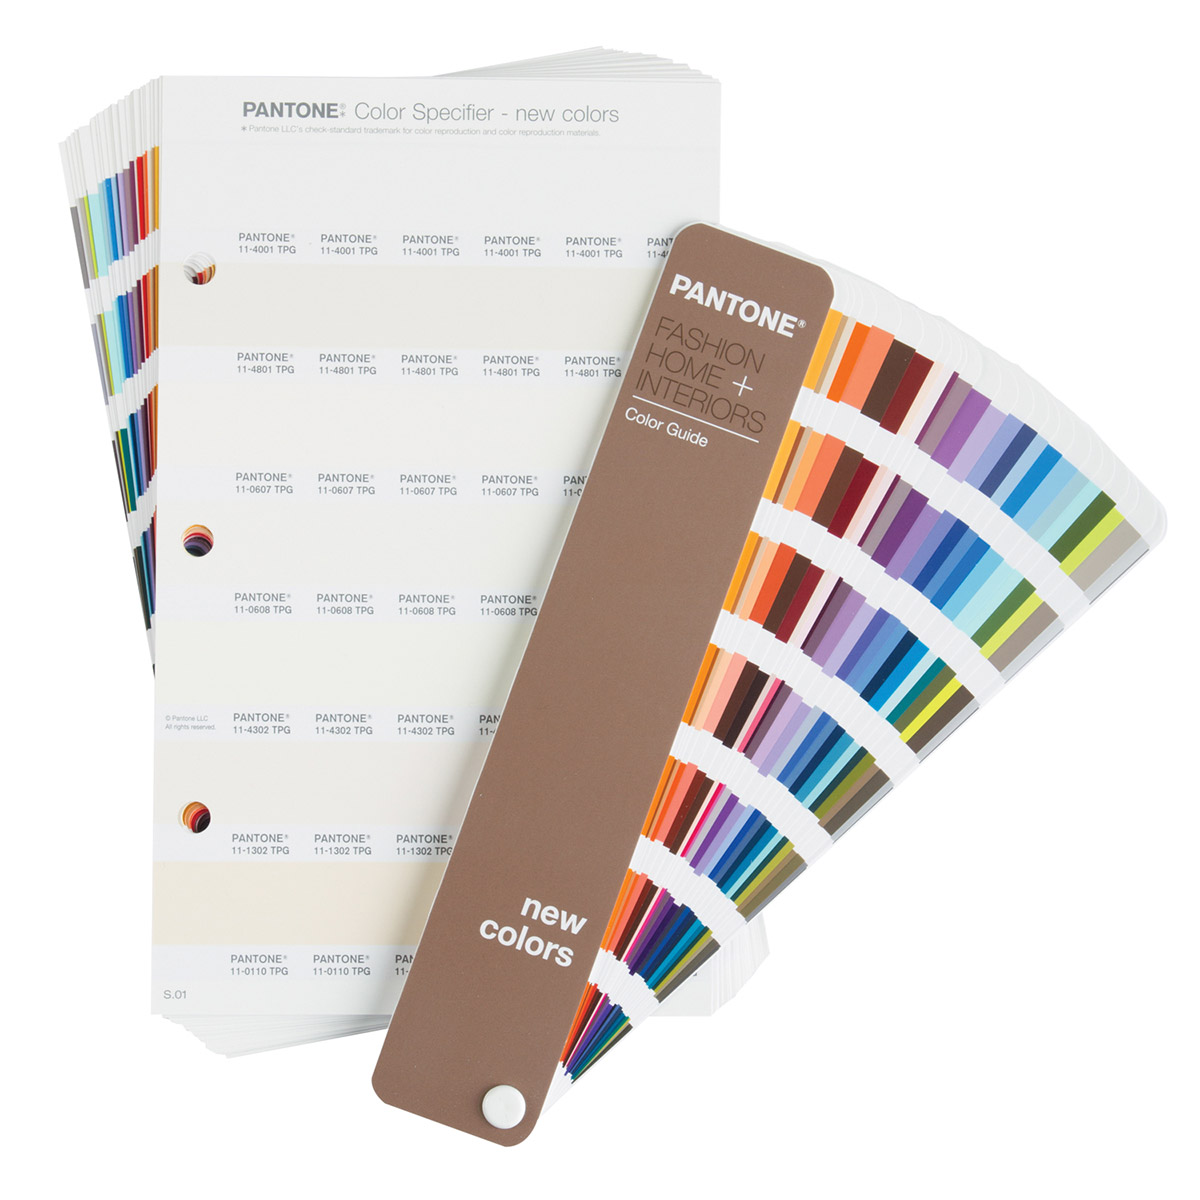 FHI Pantone Color Specifier + Guide Supplement